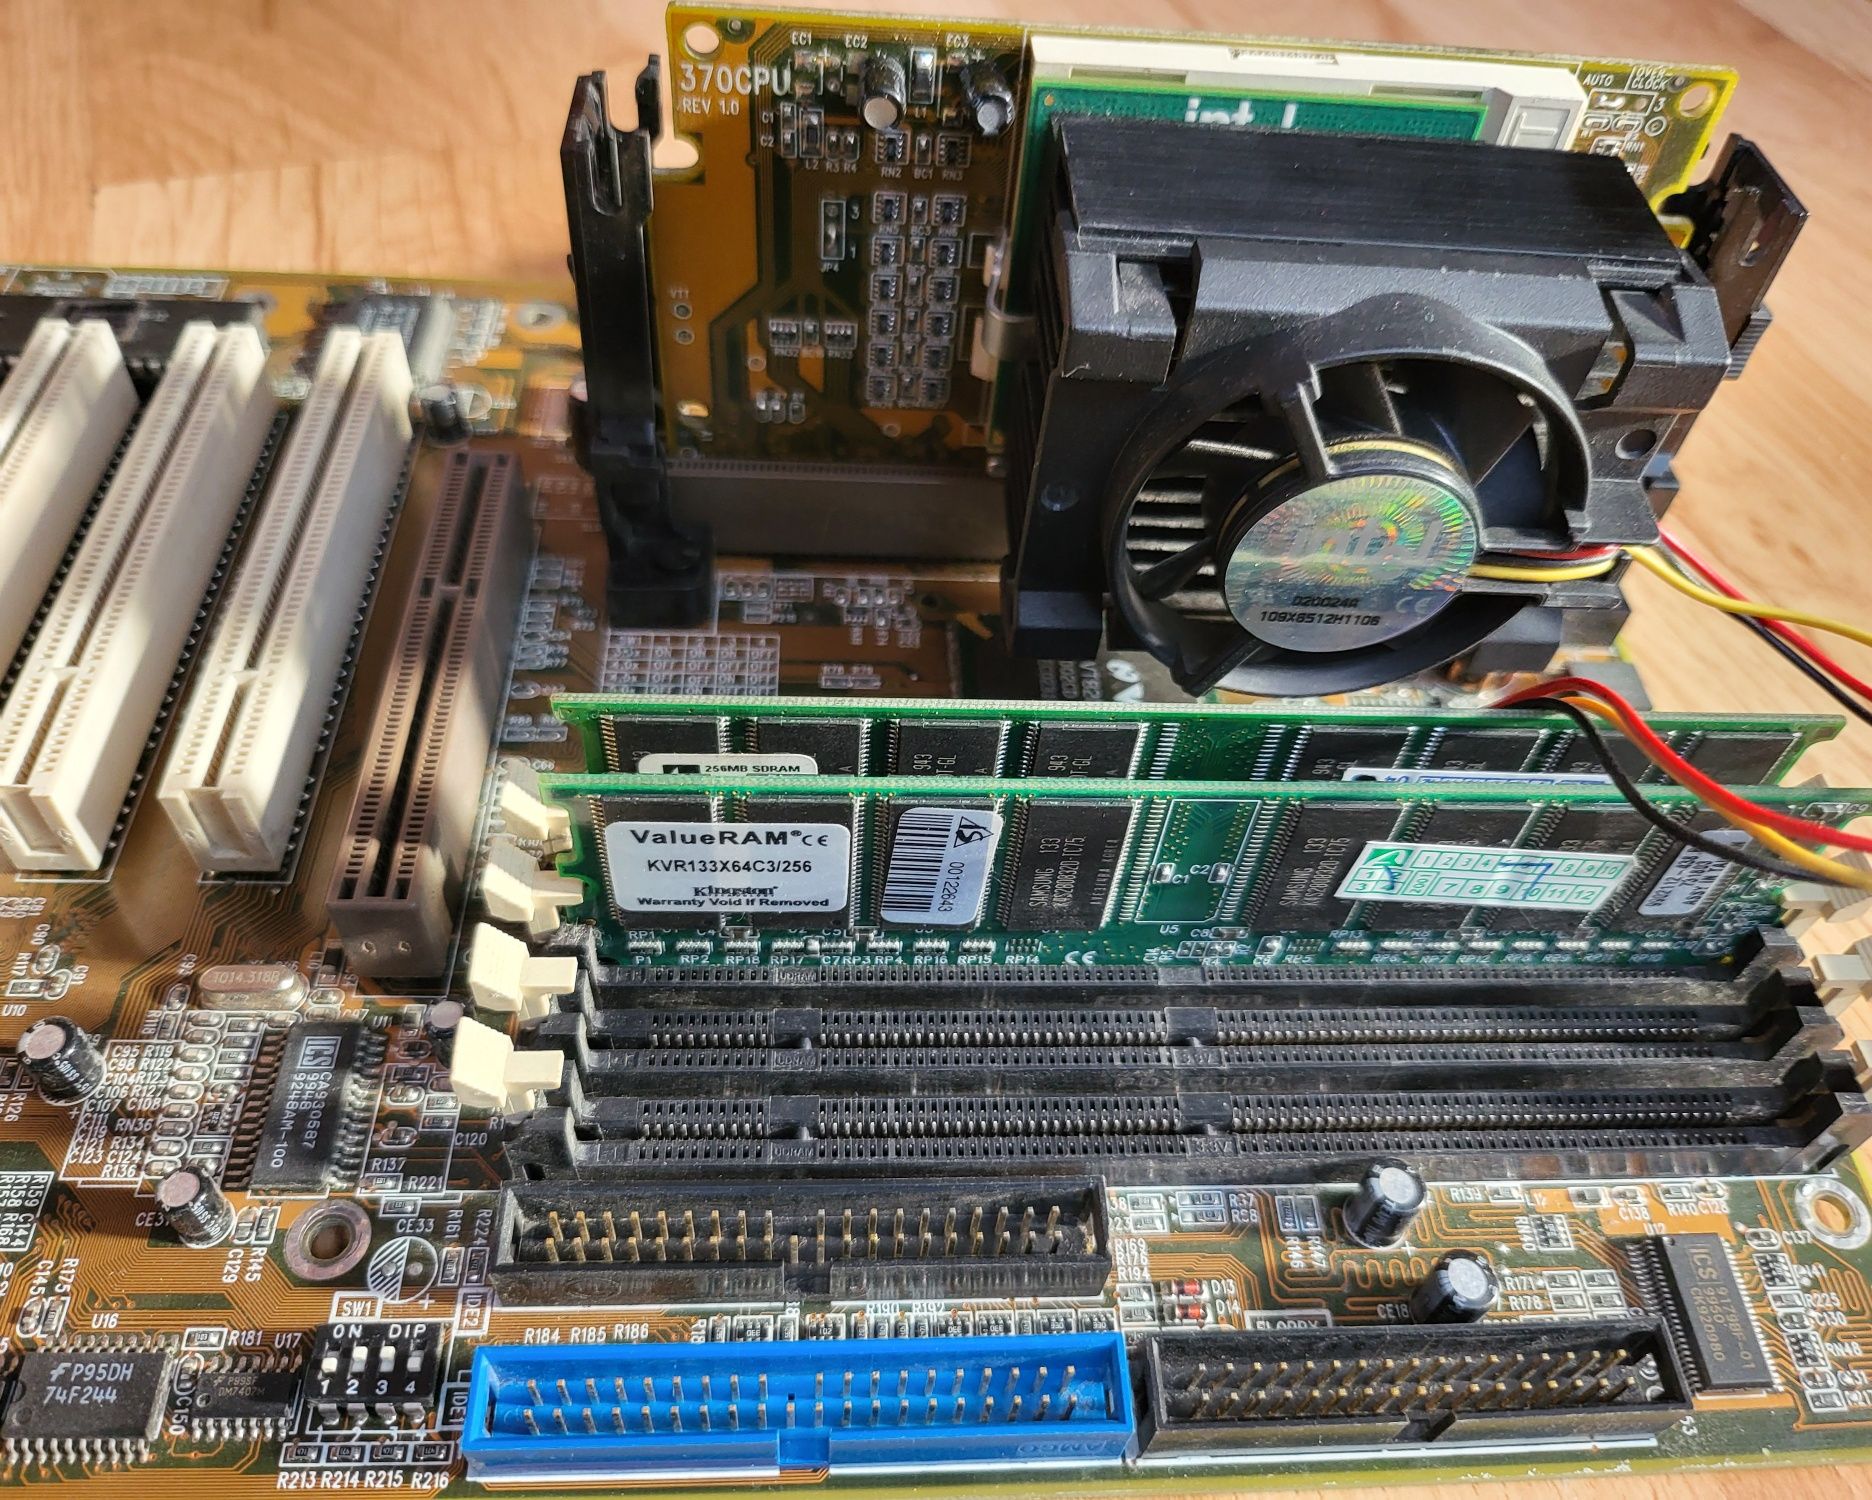 A Trend ATC6240V Pentium III 733 512MB Ram retro